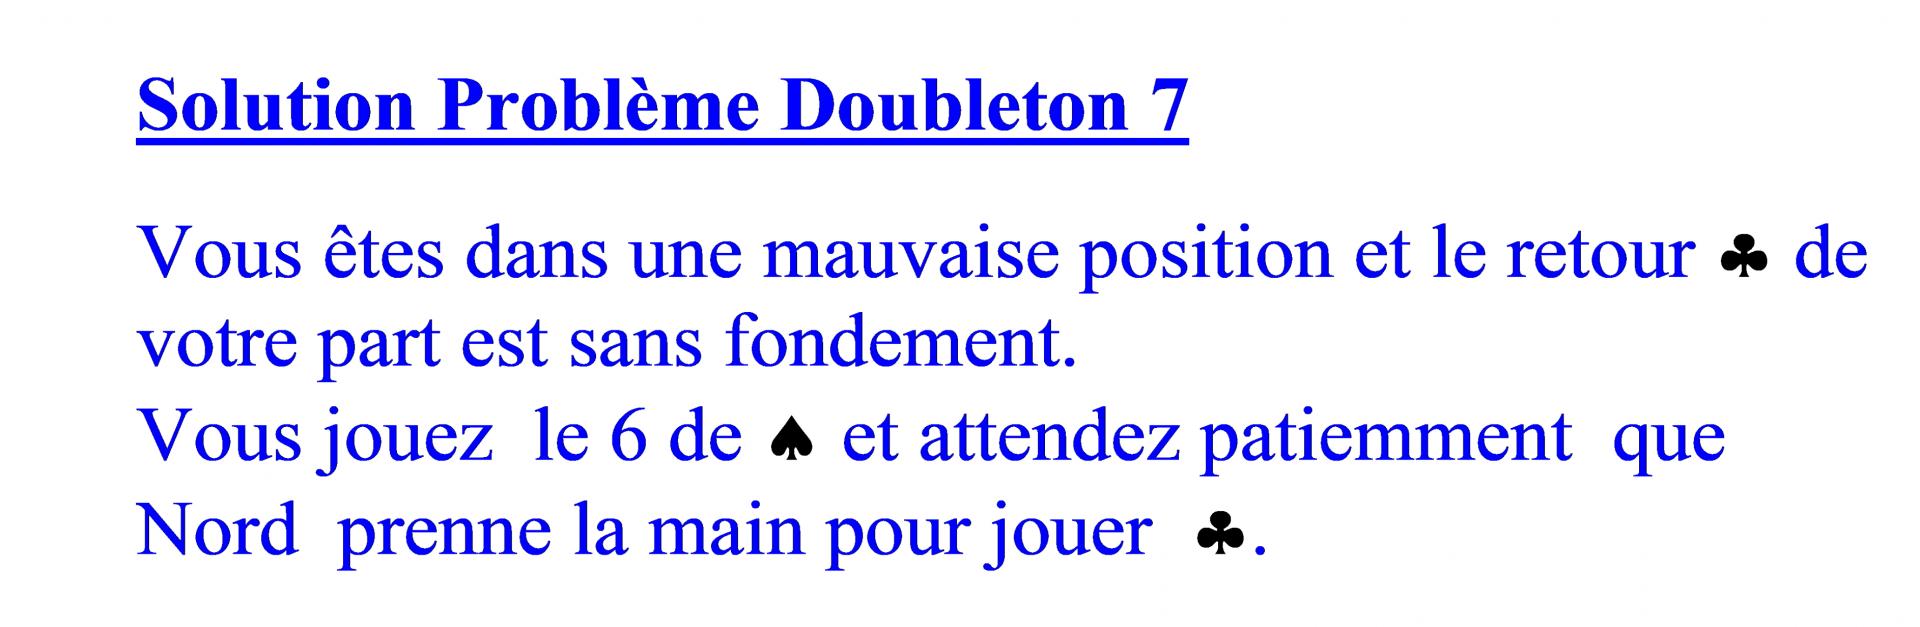 Doubleton 7 r